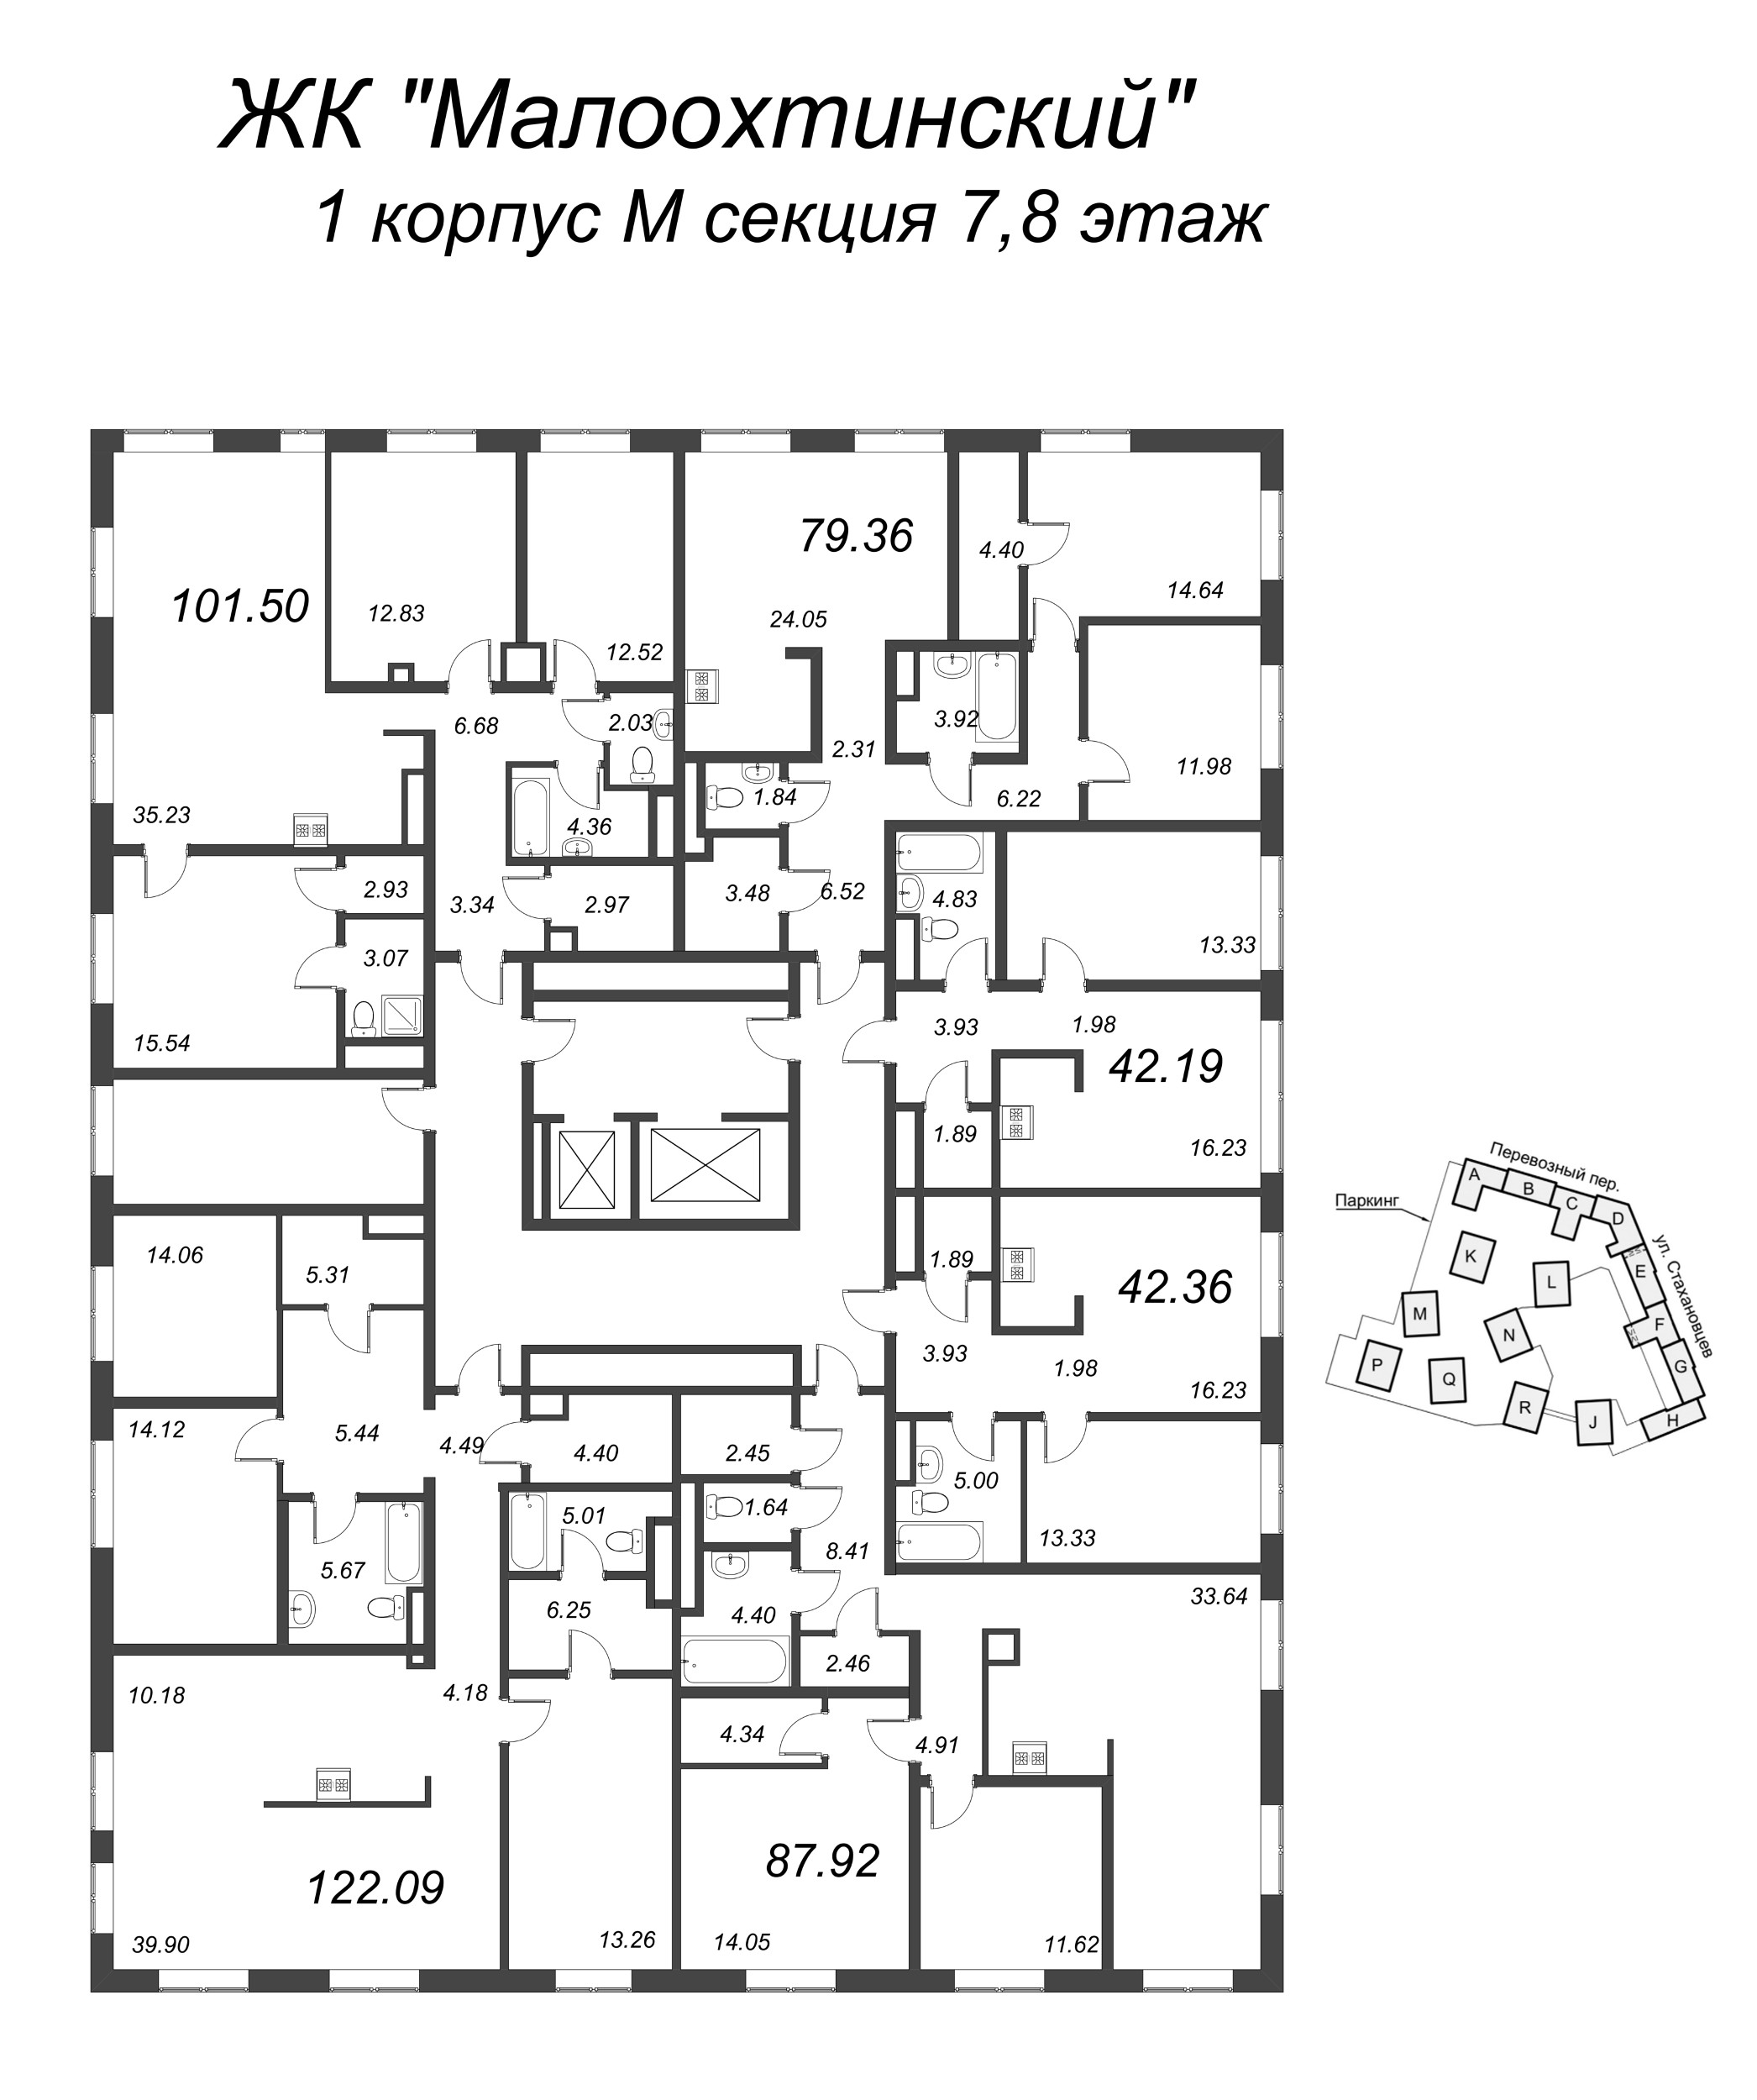 4-комнатная (Евро) квартира, 124.6 м² - планировка этажа